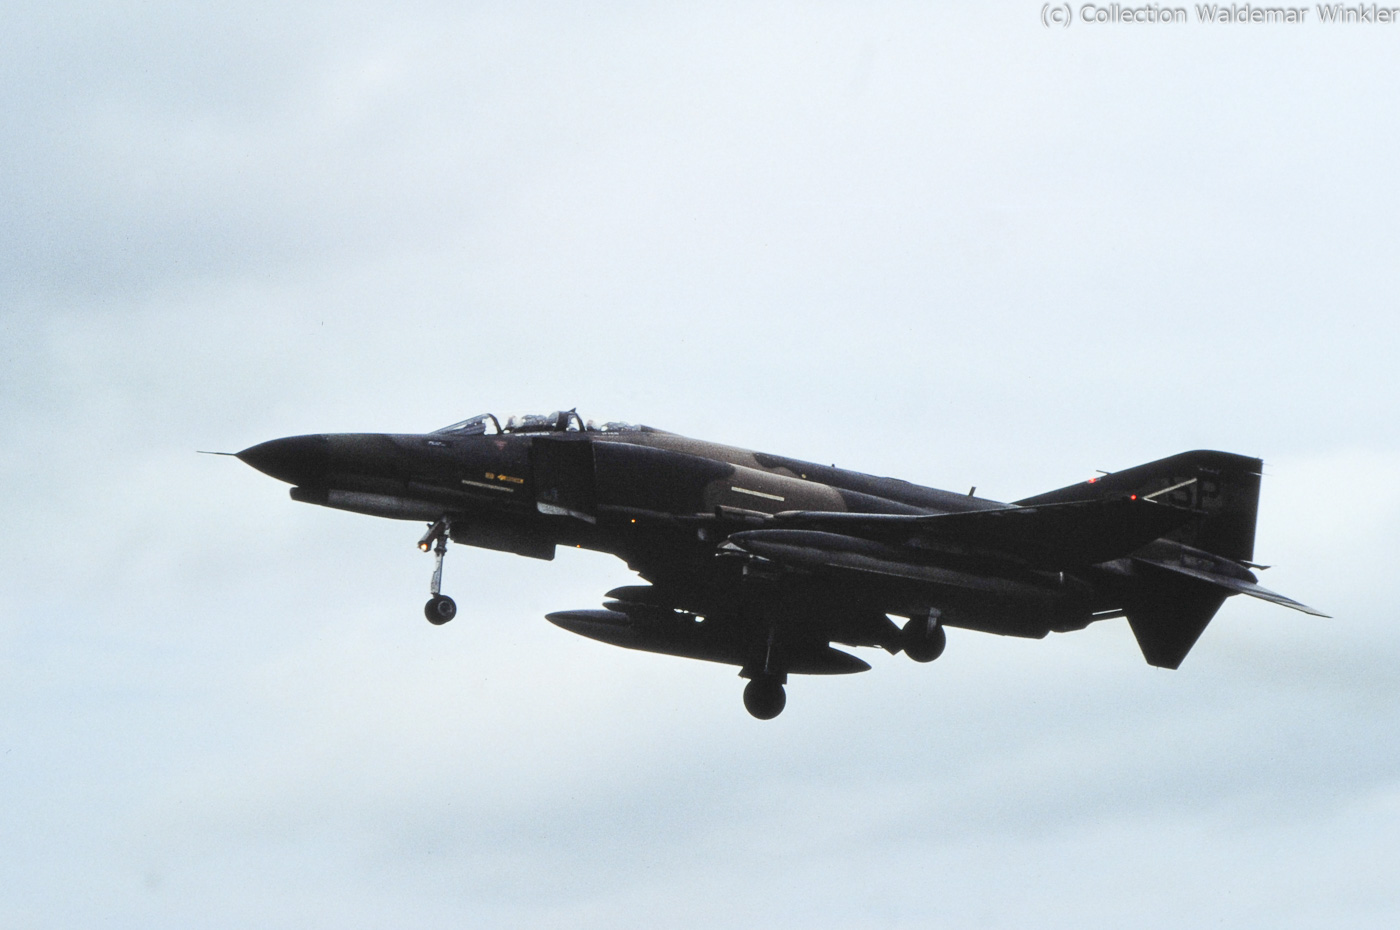 F-4_Phantom_II_DSC_2903.jpg